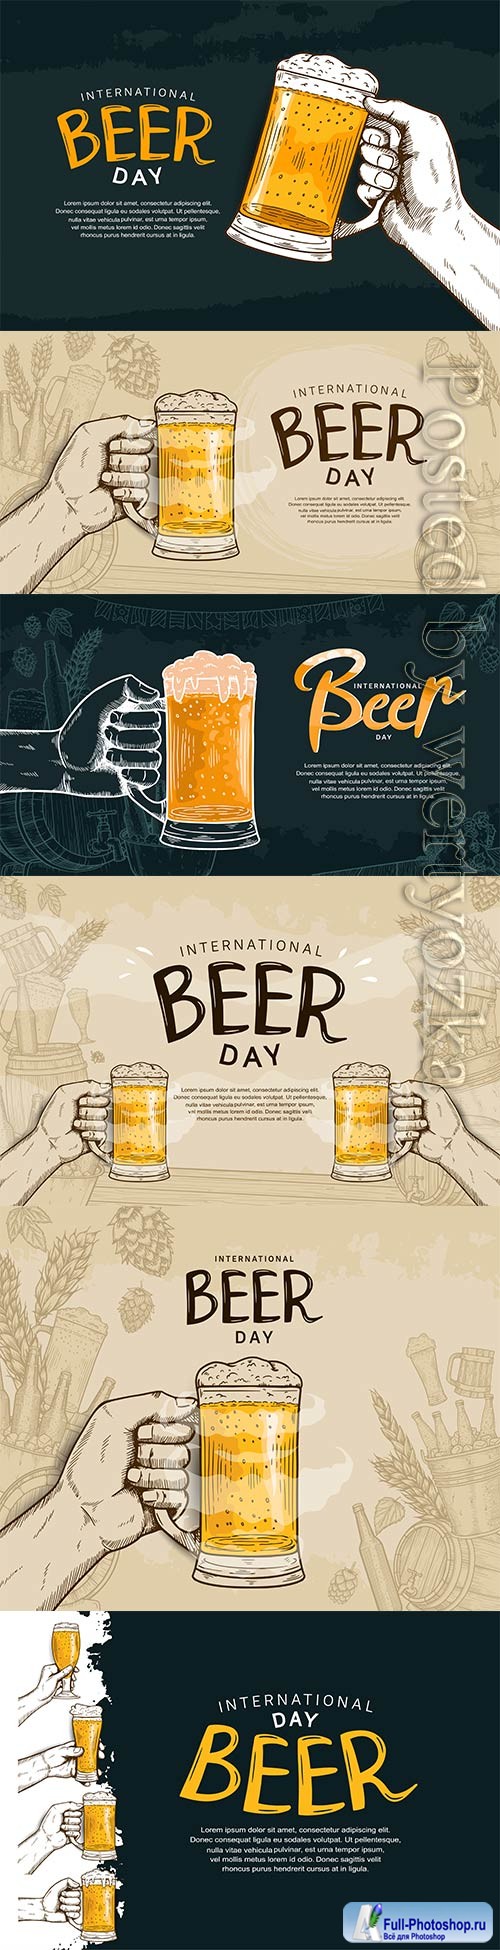 International beer day illustration design